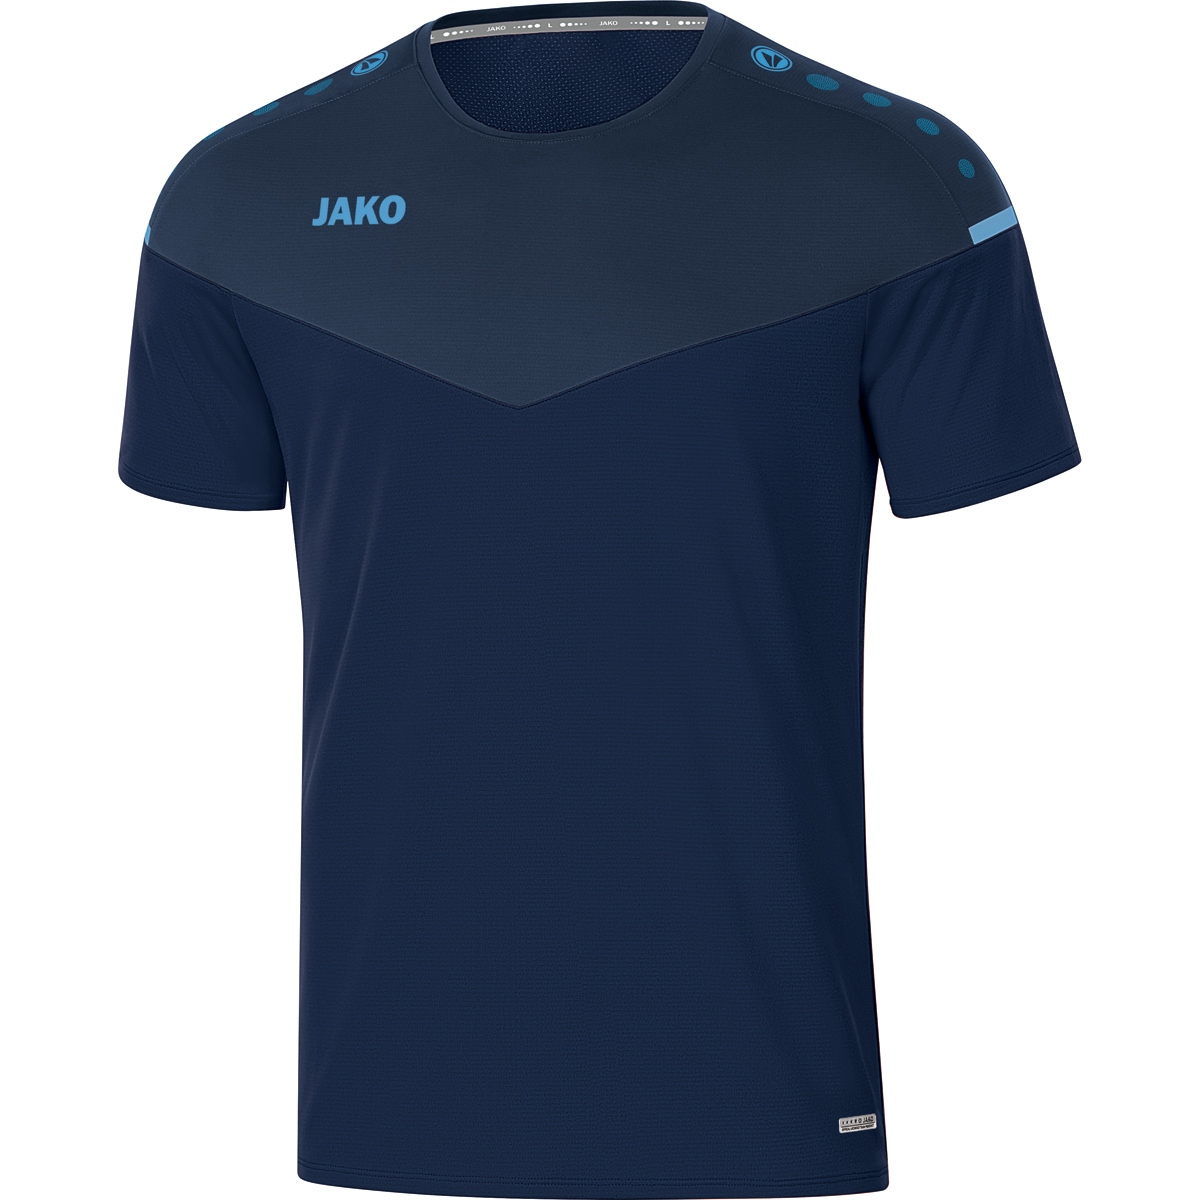 JAKO T-Shirt Champ Herren, 6120 L, marine/darkblue/skyblue, 2.0 Gr